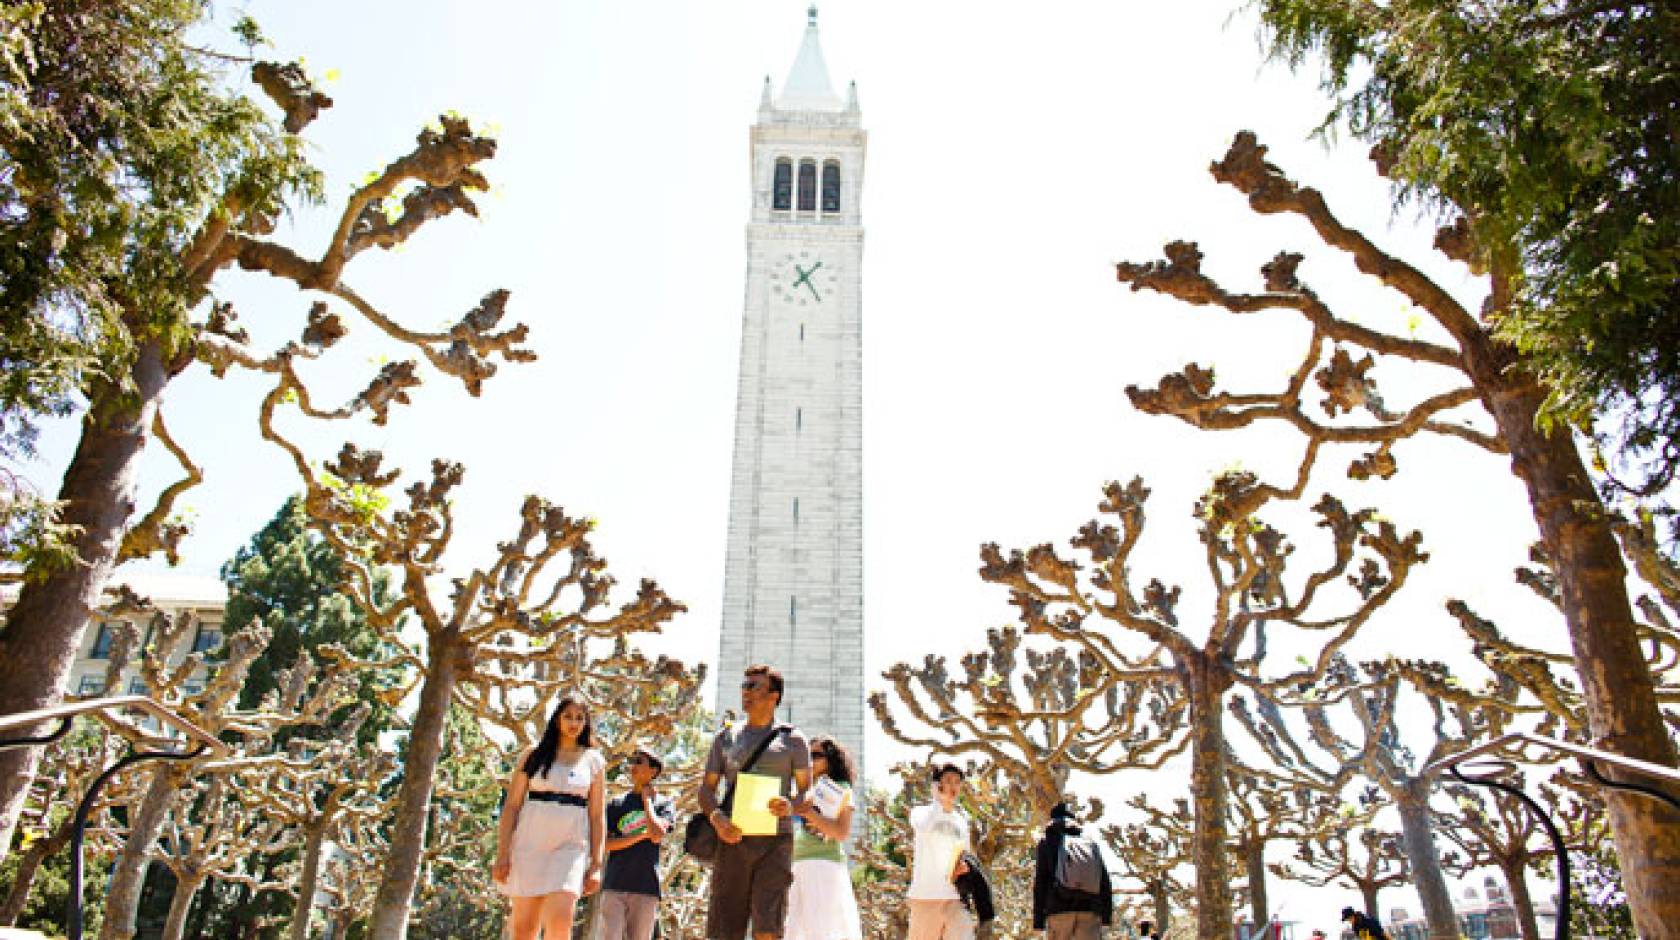 UC Berkeley campus